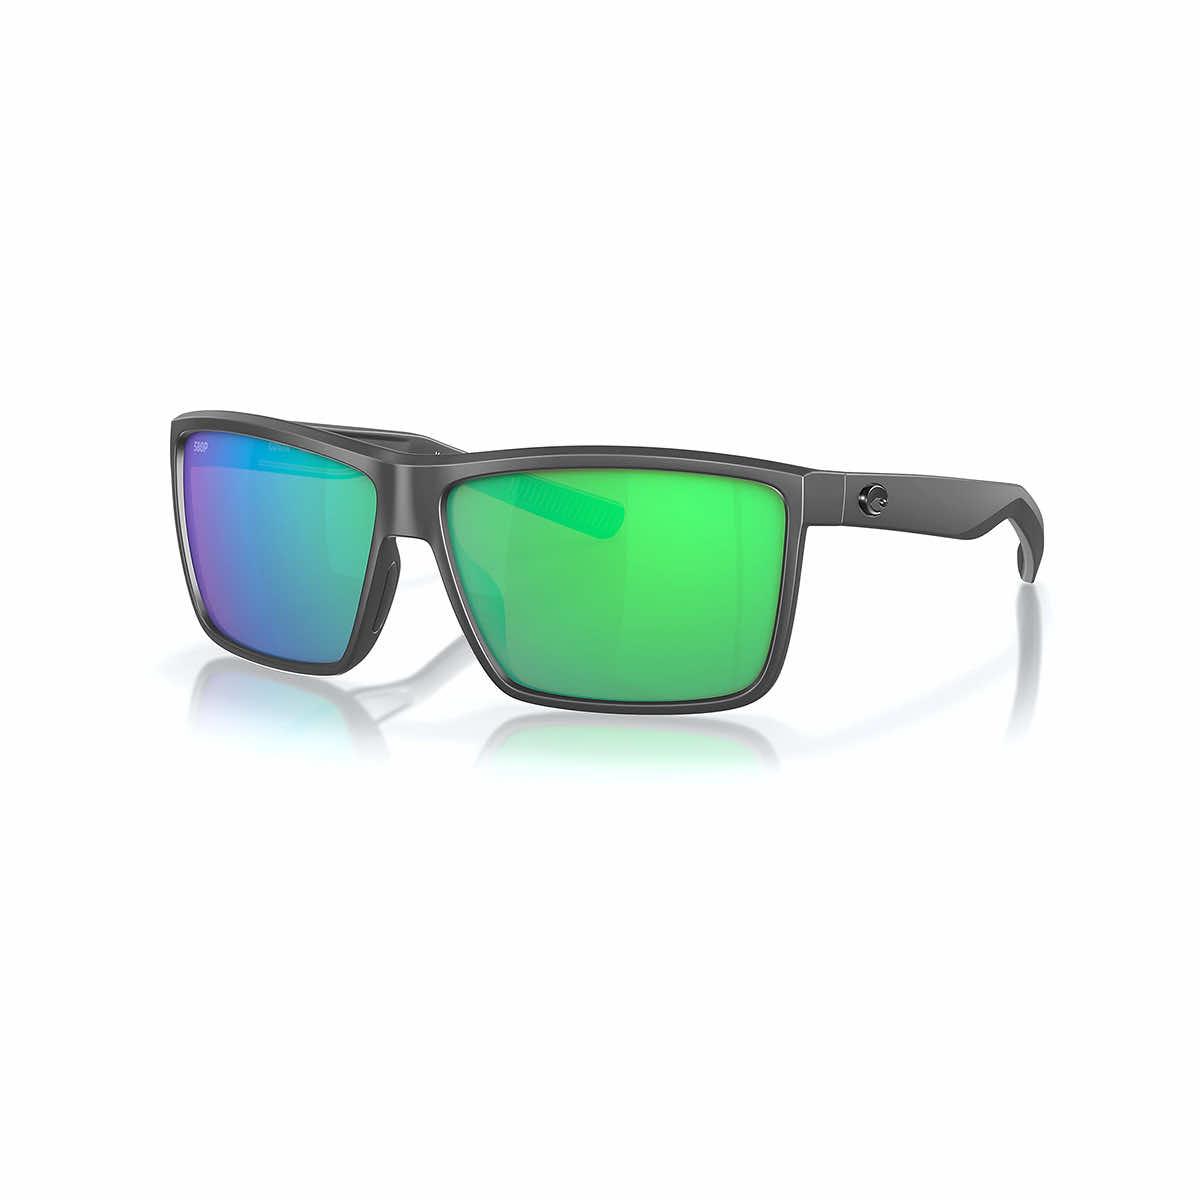  Rinconcito 580p Sunglasses - Polarized Plastic